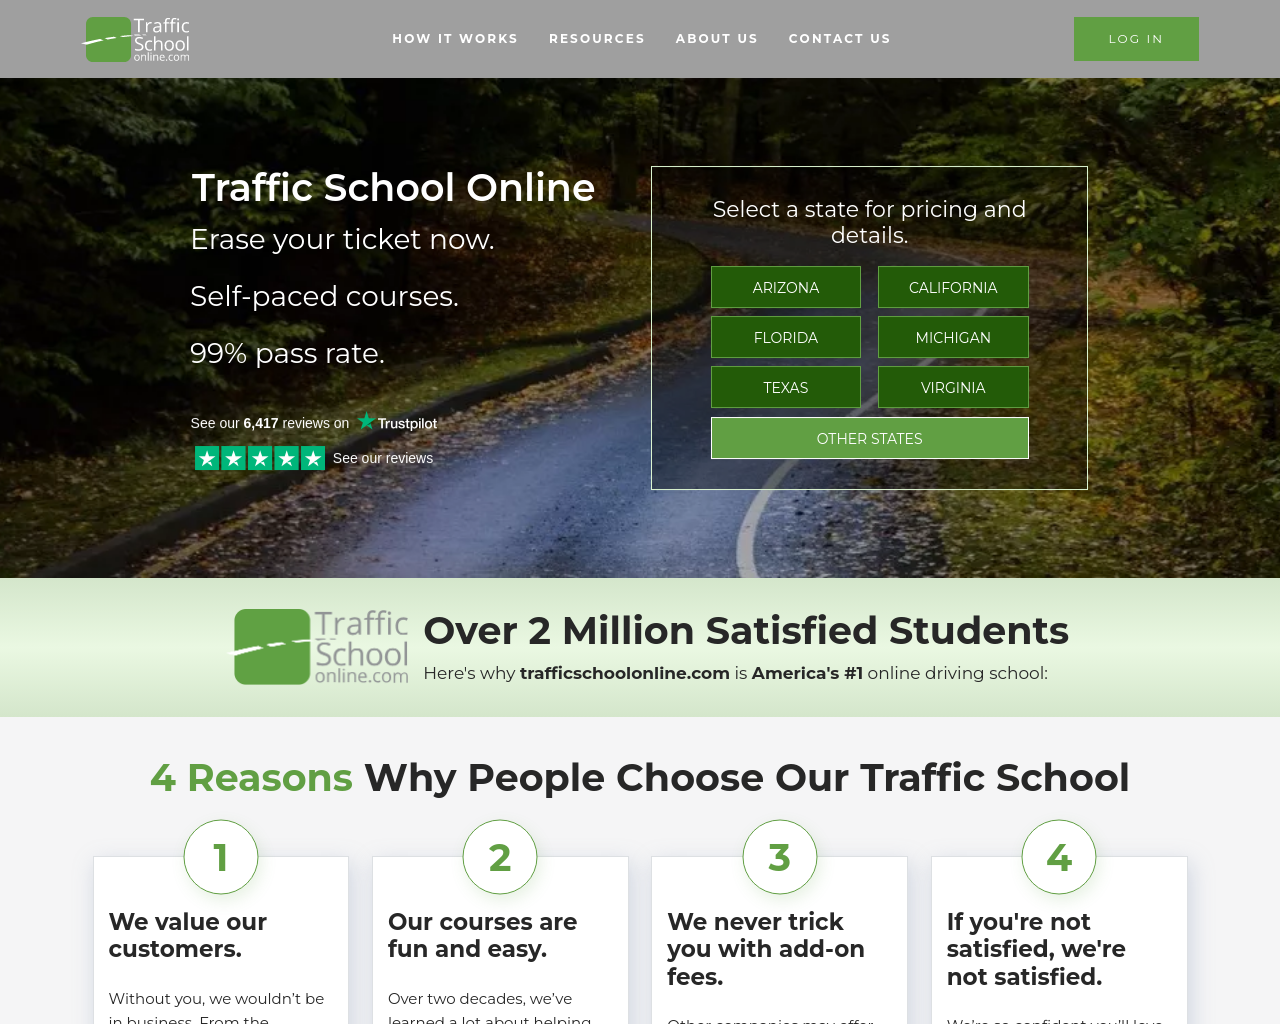 trafficschoolonline.com